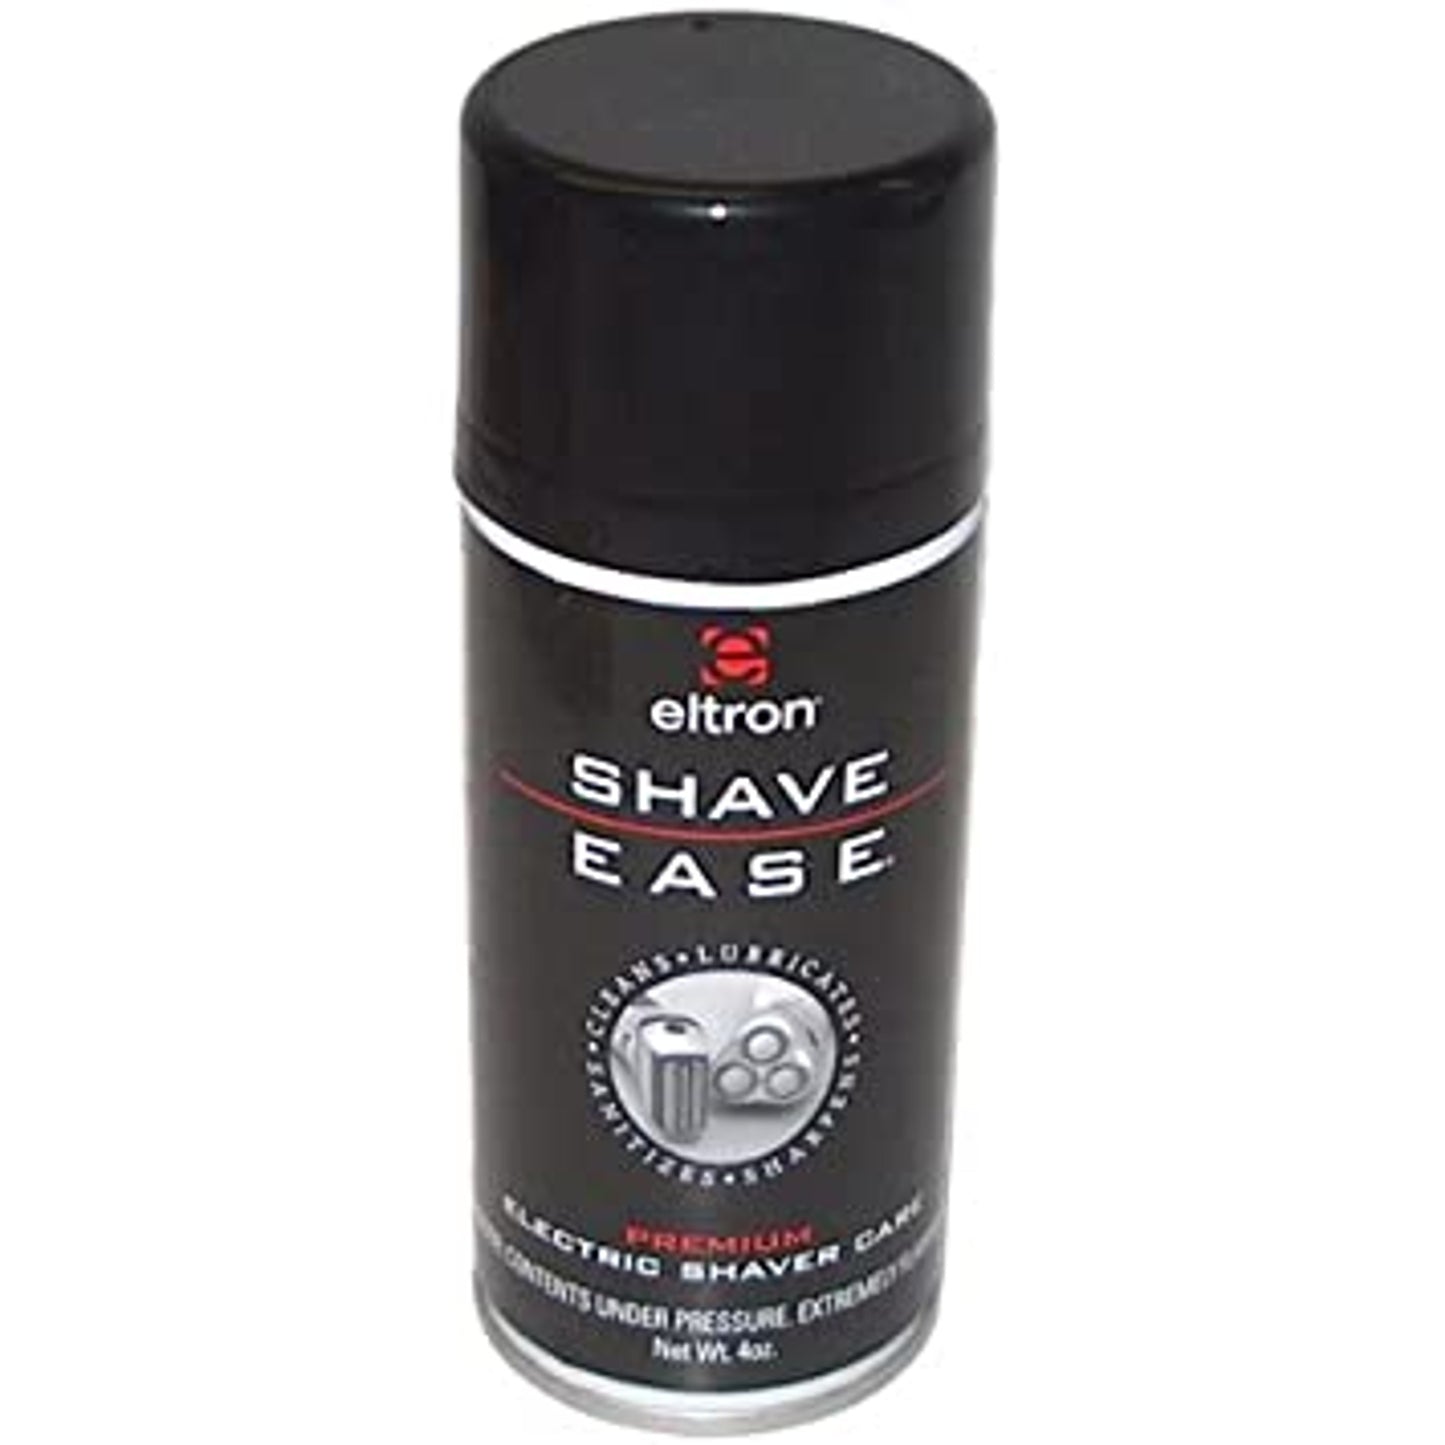 Eltron Shave Ease Premium Electric Shaver Care